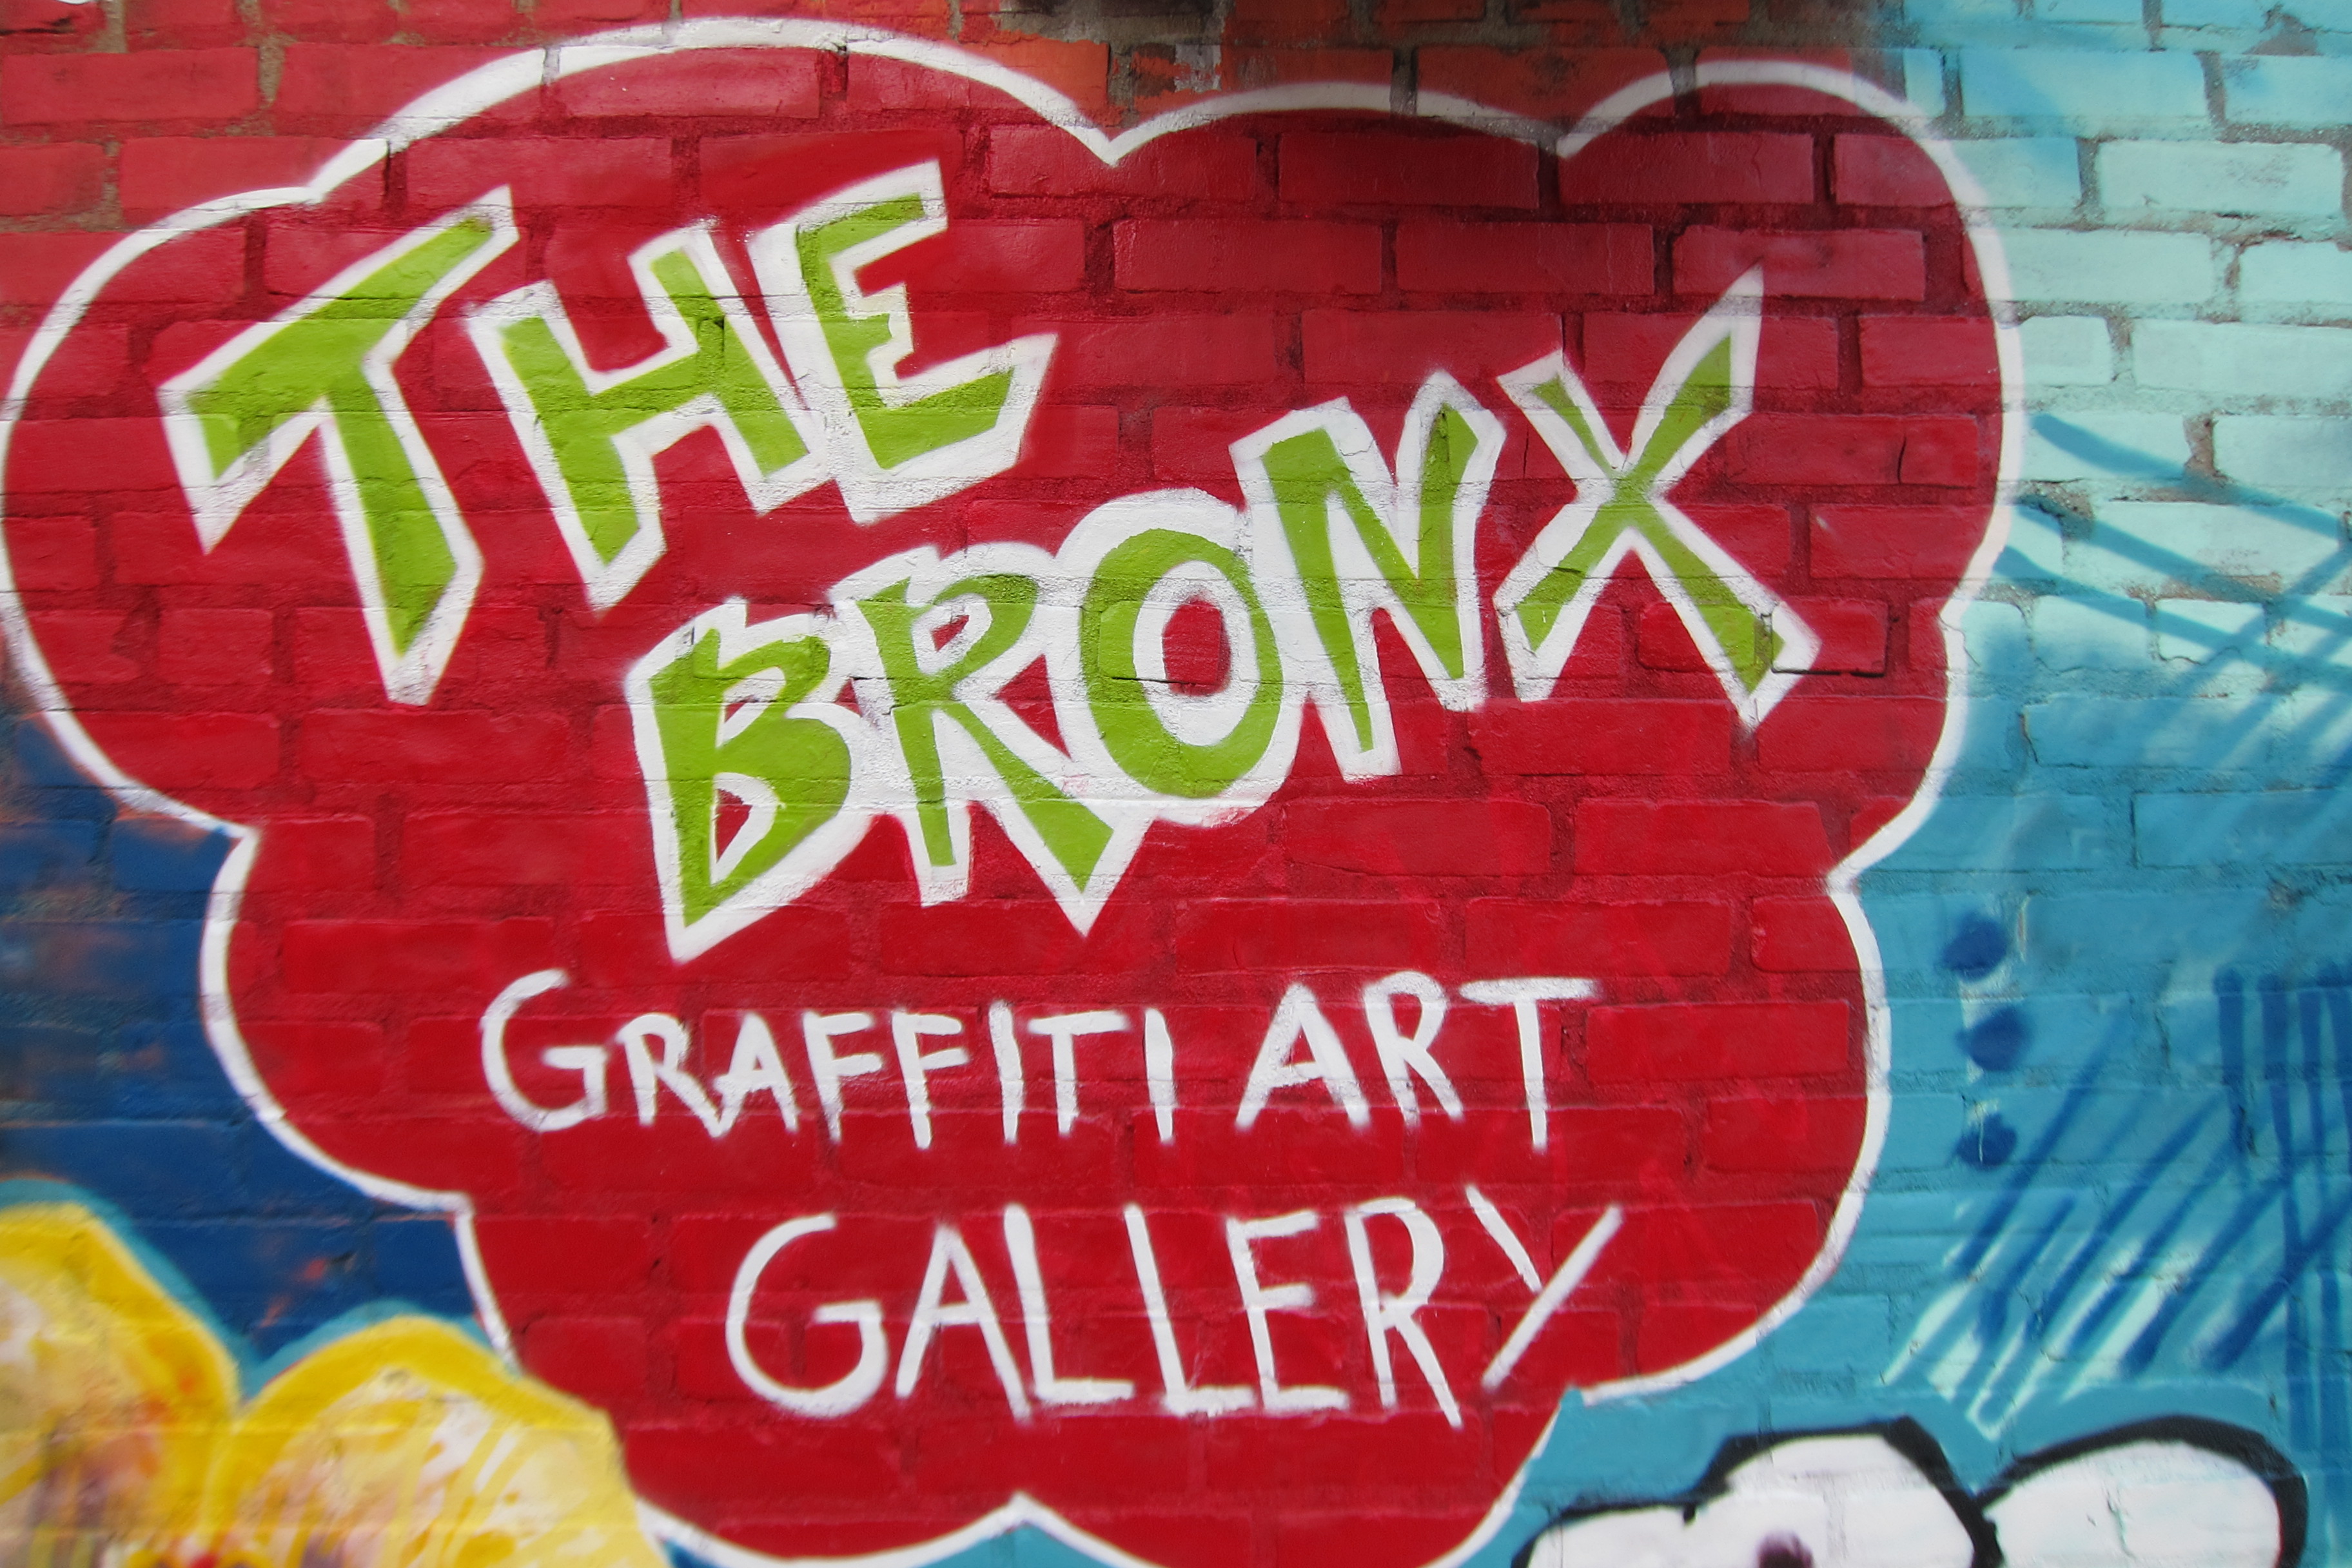 he bronx graffiti art gallery